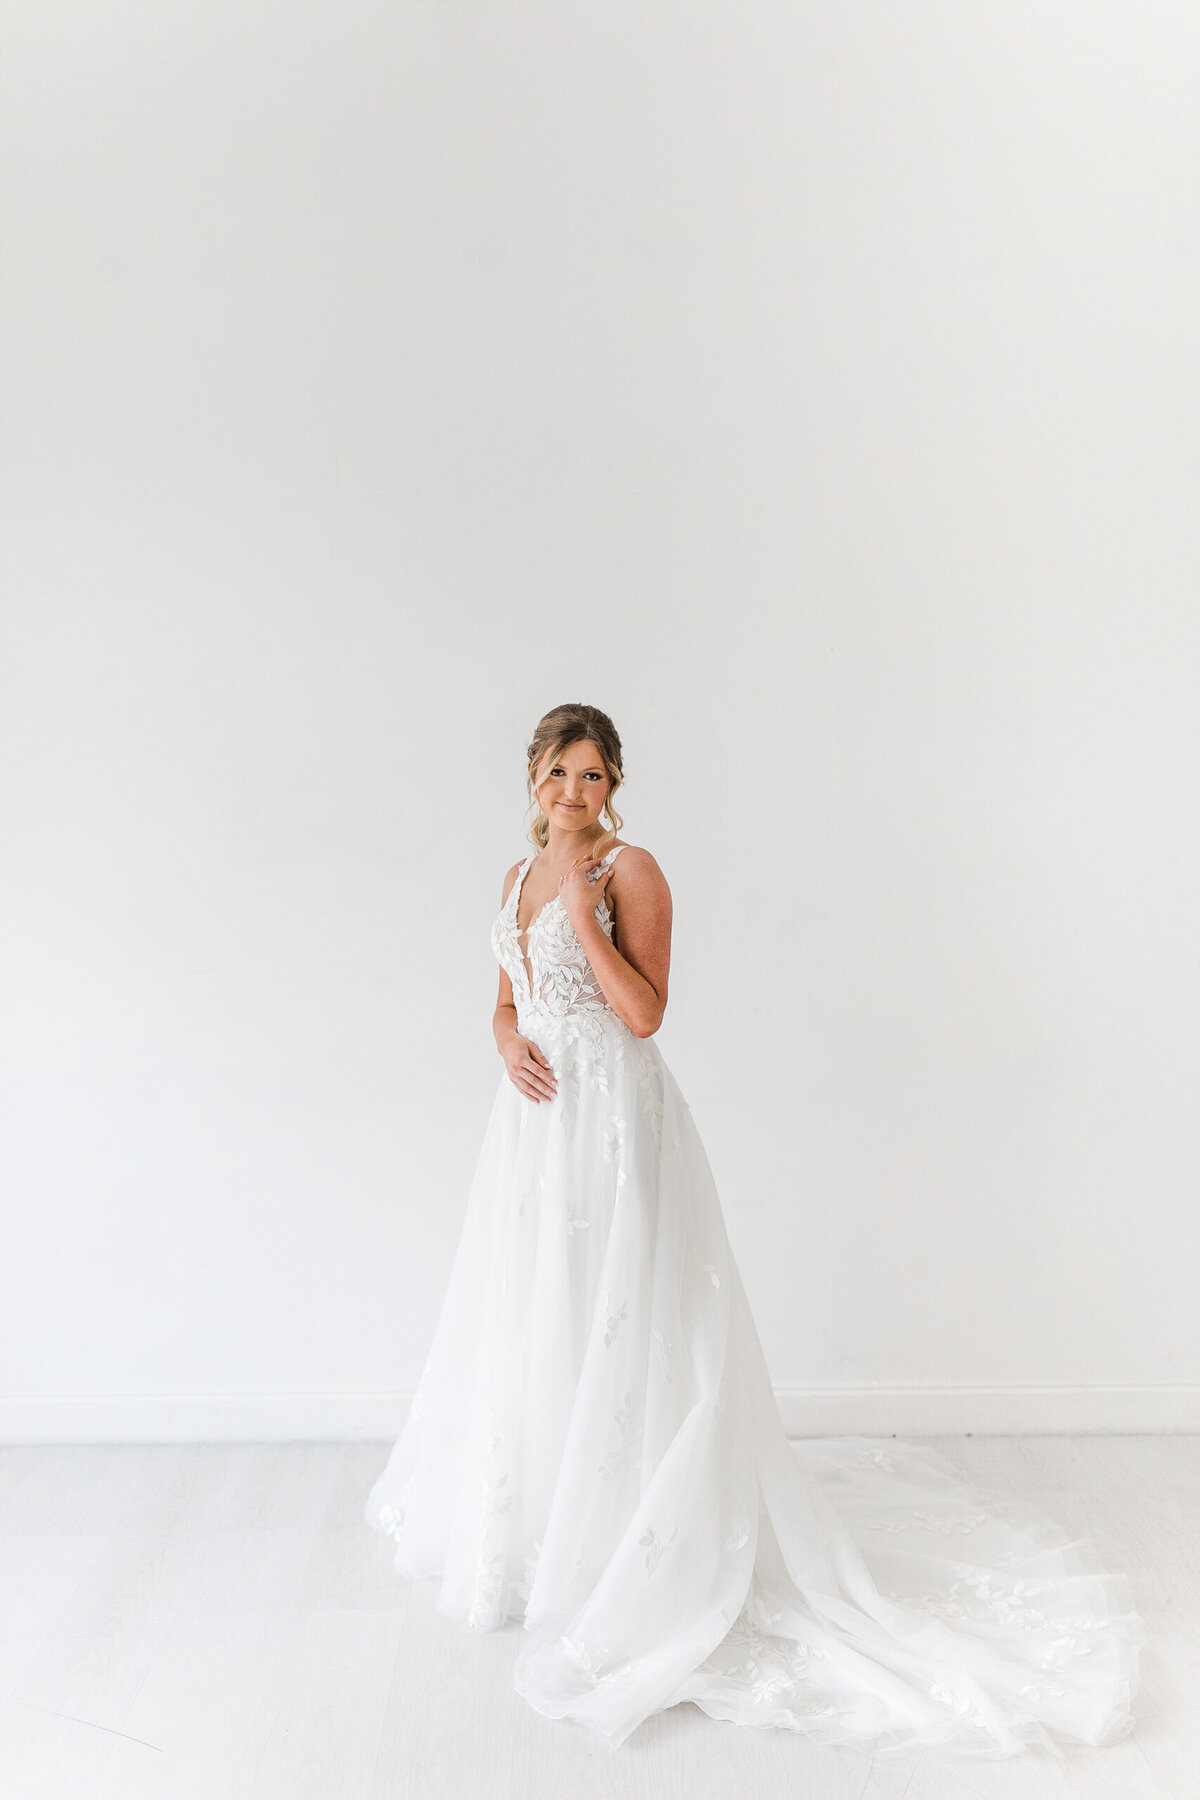 Marissa Reib Photography | Tulsa Wedding Photographer-24-2